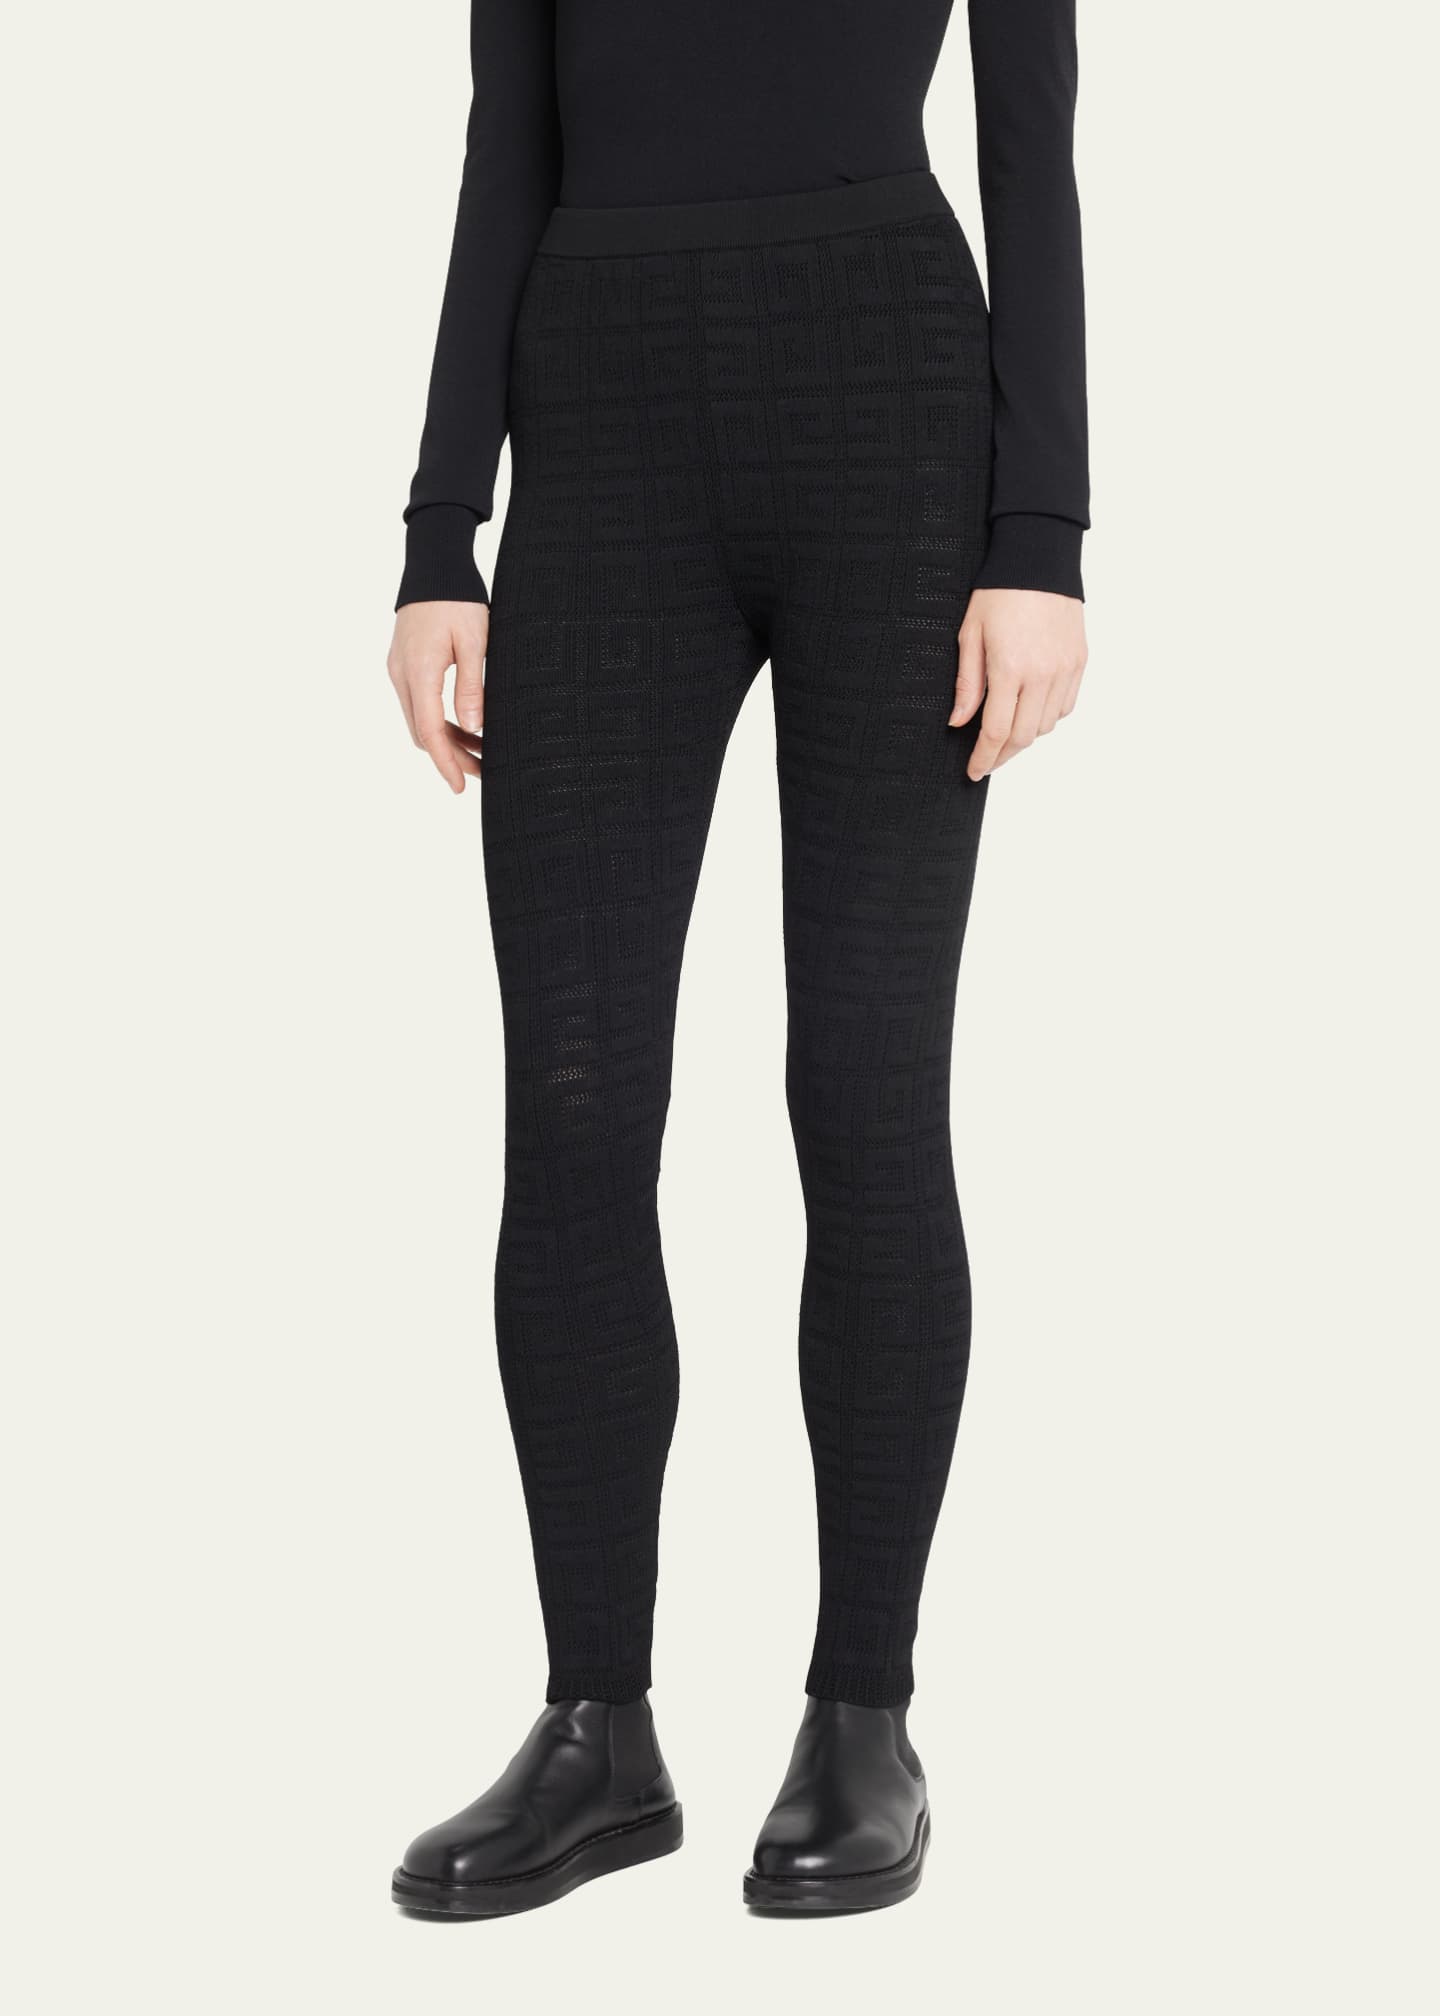 Givenchy Black Knit Skinny Leggings M Givenchy | The Luxury Closet